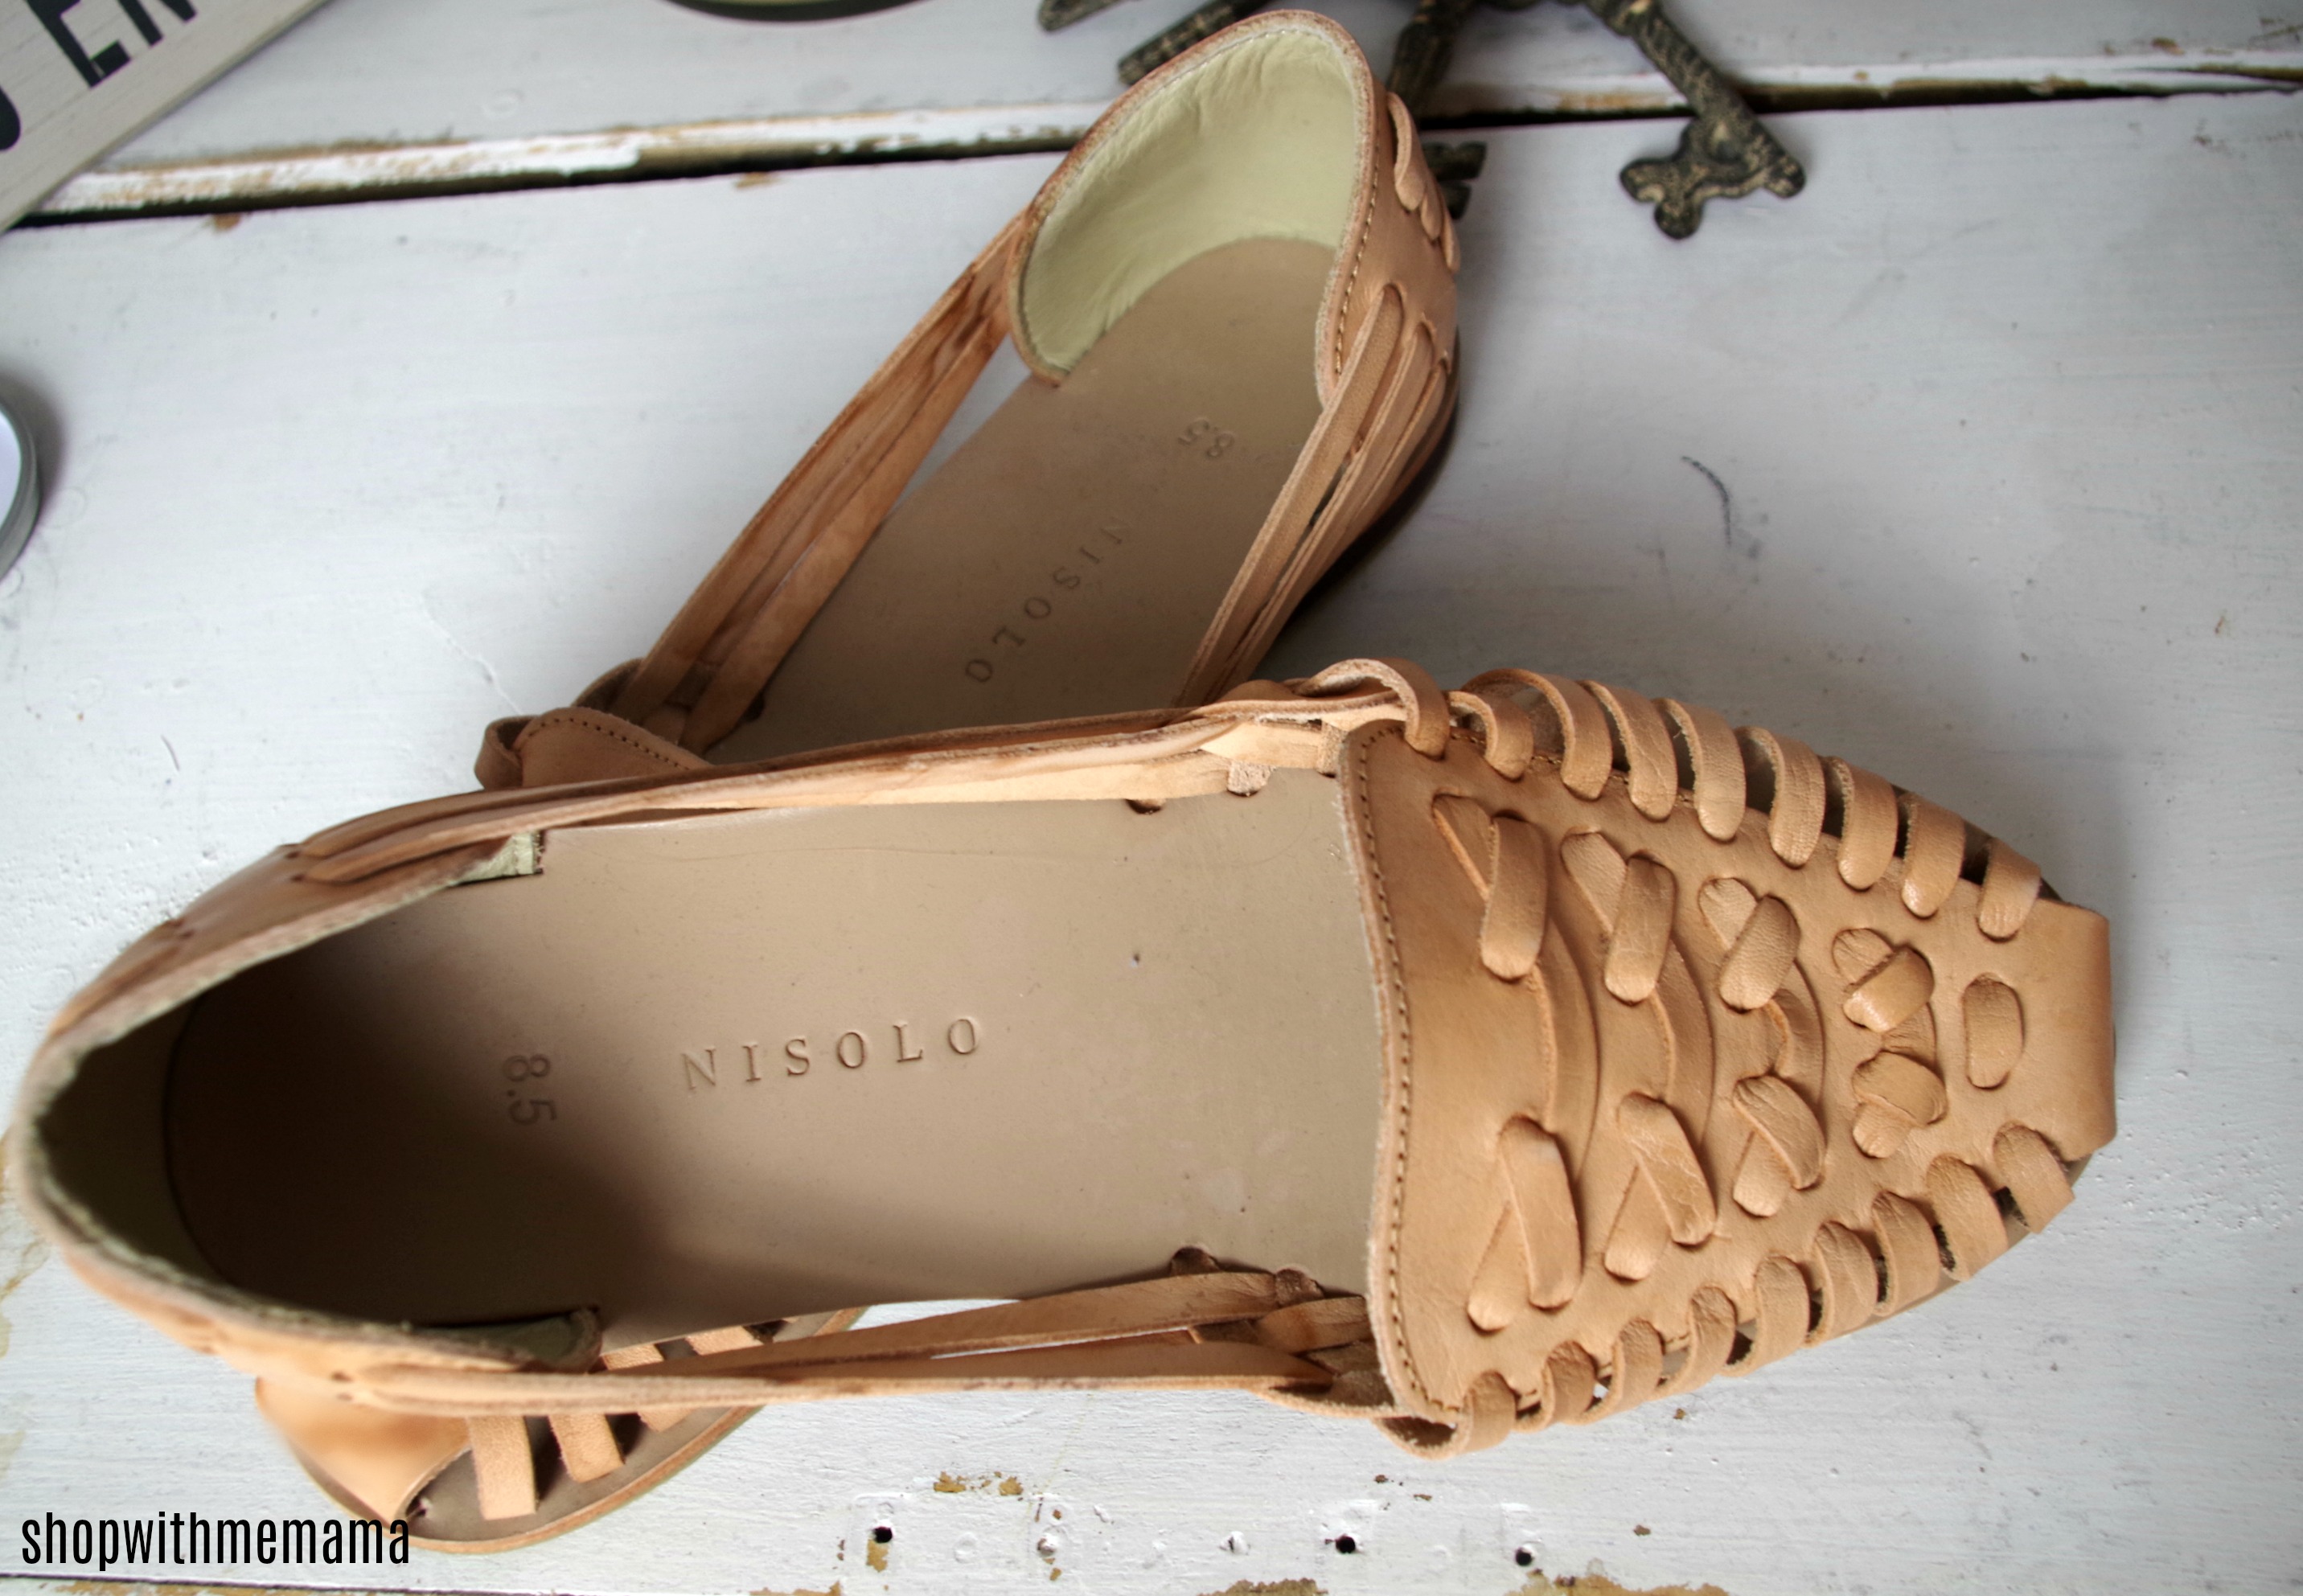 Nisolo Huarache Sandals Review 